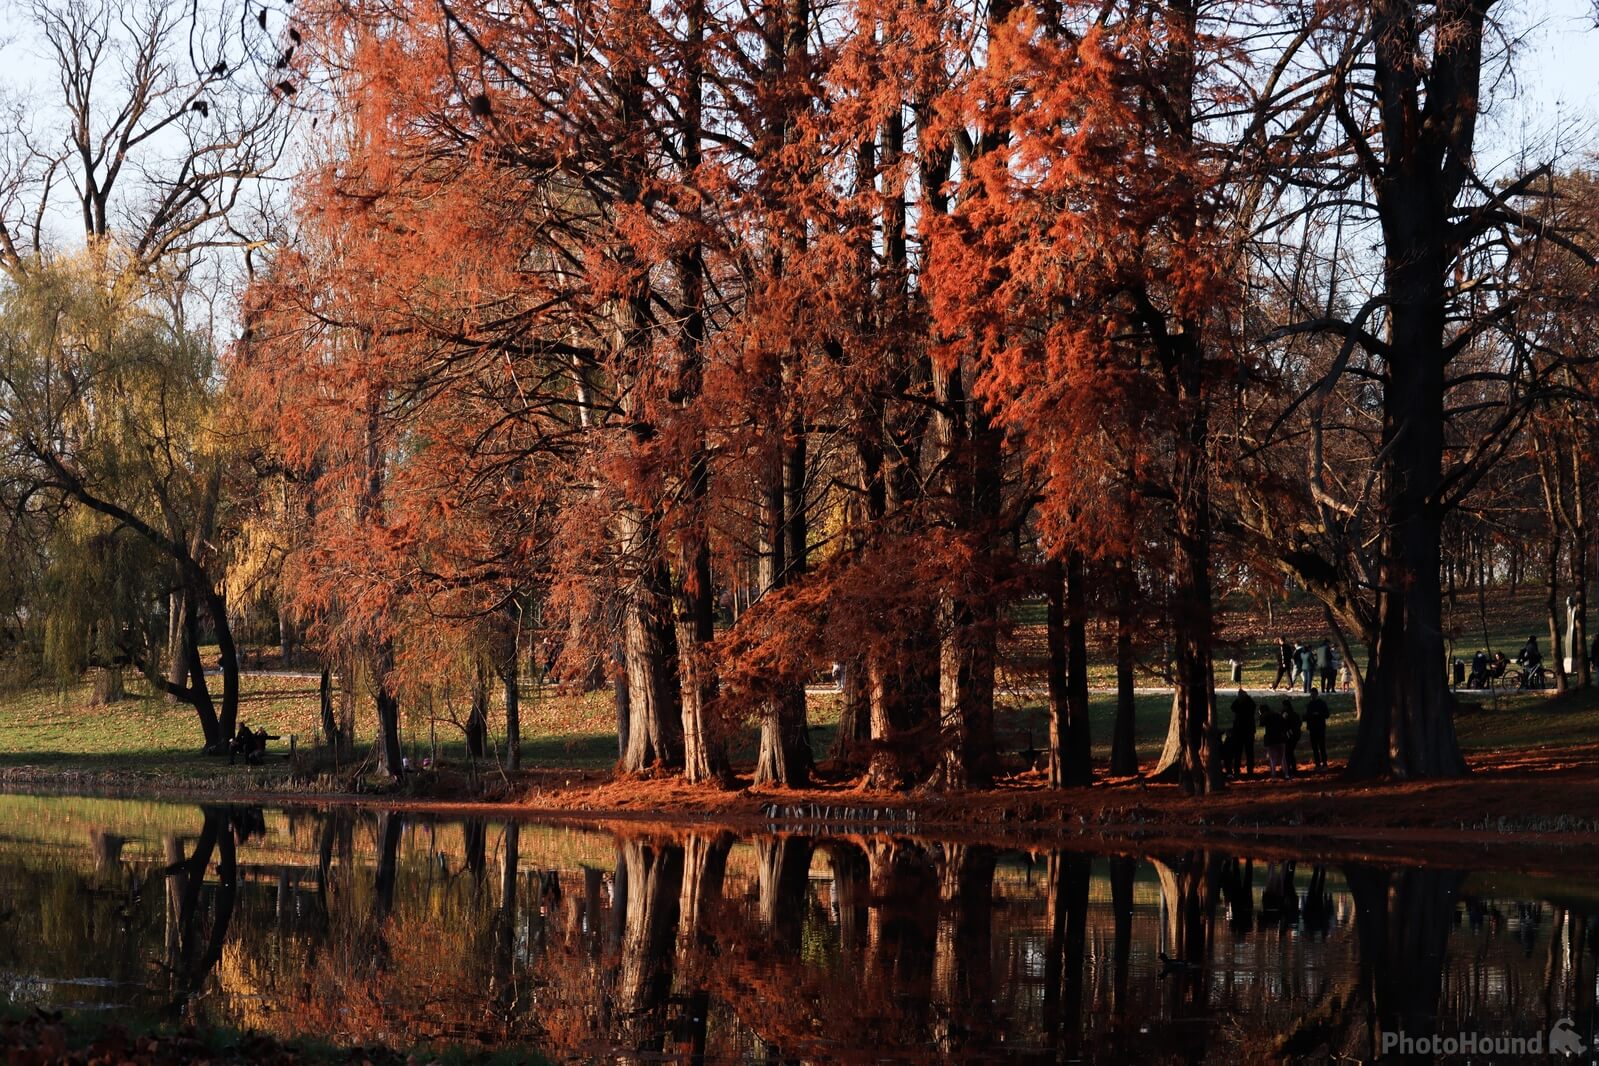 Image of Nicolae Romanescu Park by Cristian Balu